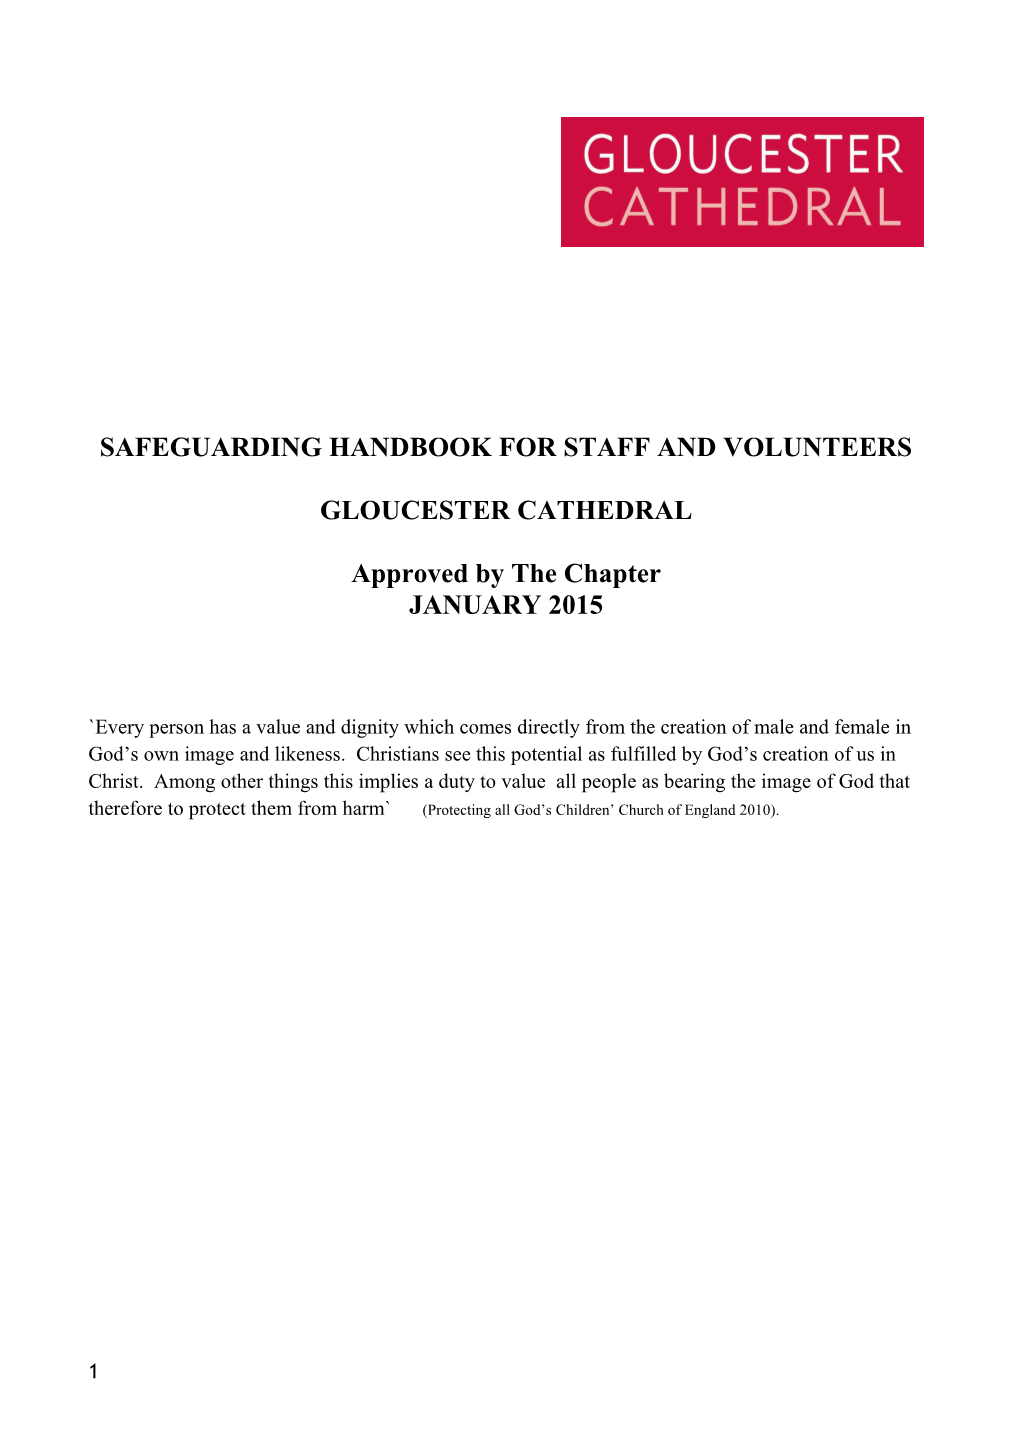 Safeguarding Handbook for Staff and Volunteers